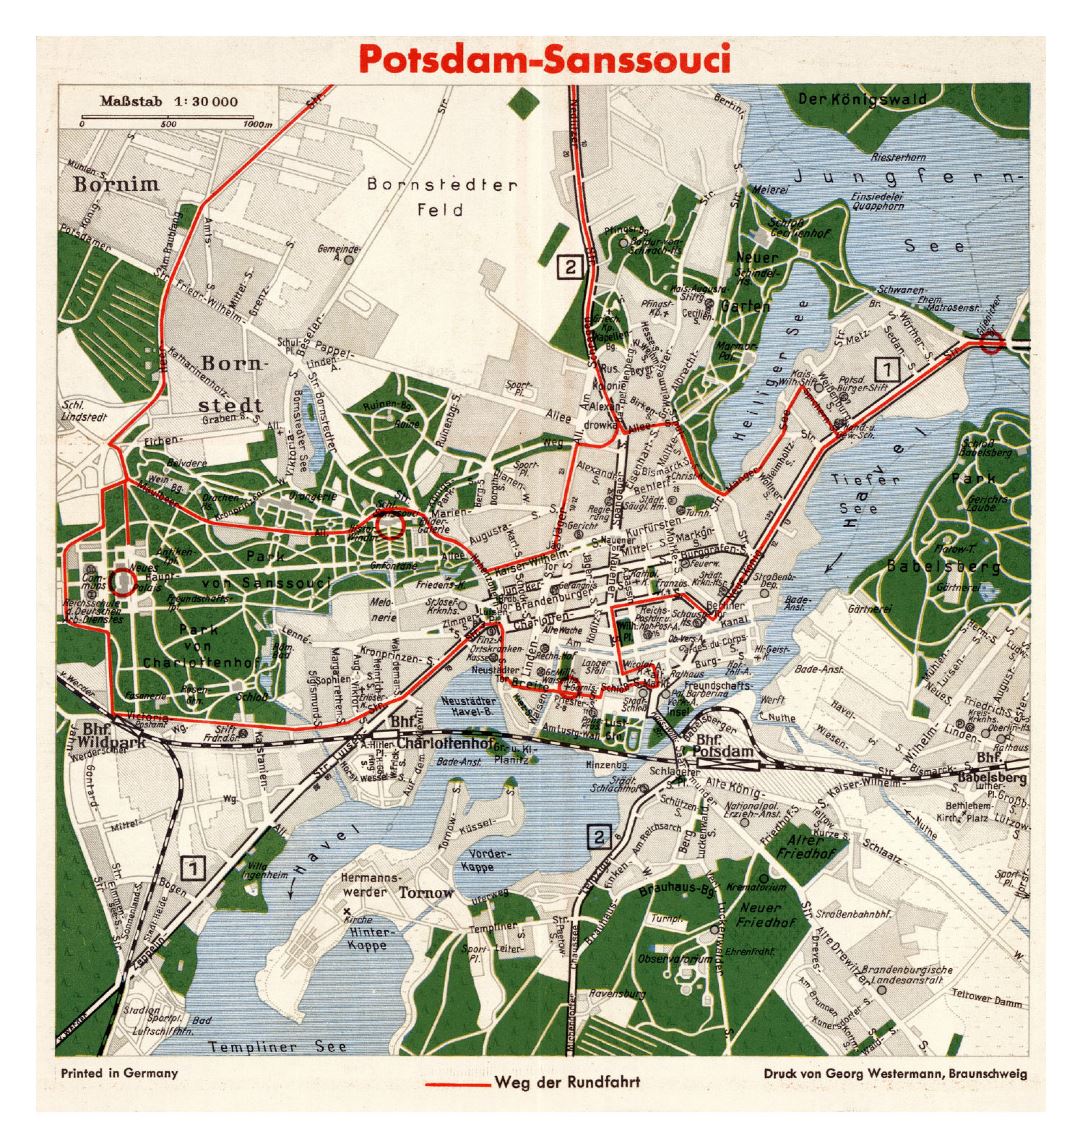 Gran mapa detallado de Potsdam-Sanssouci con otras marcas